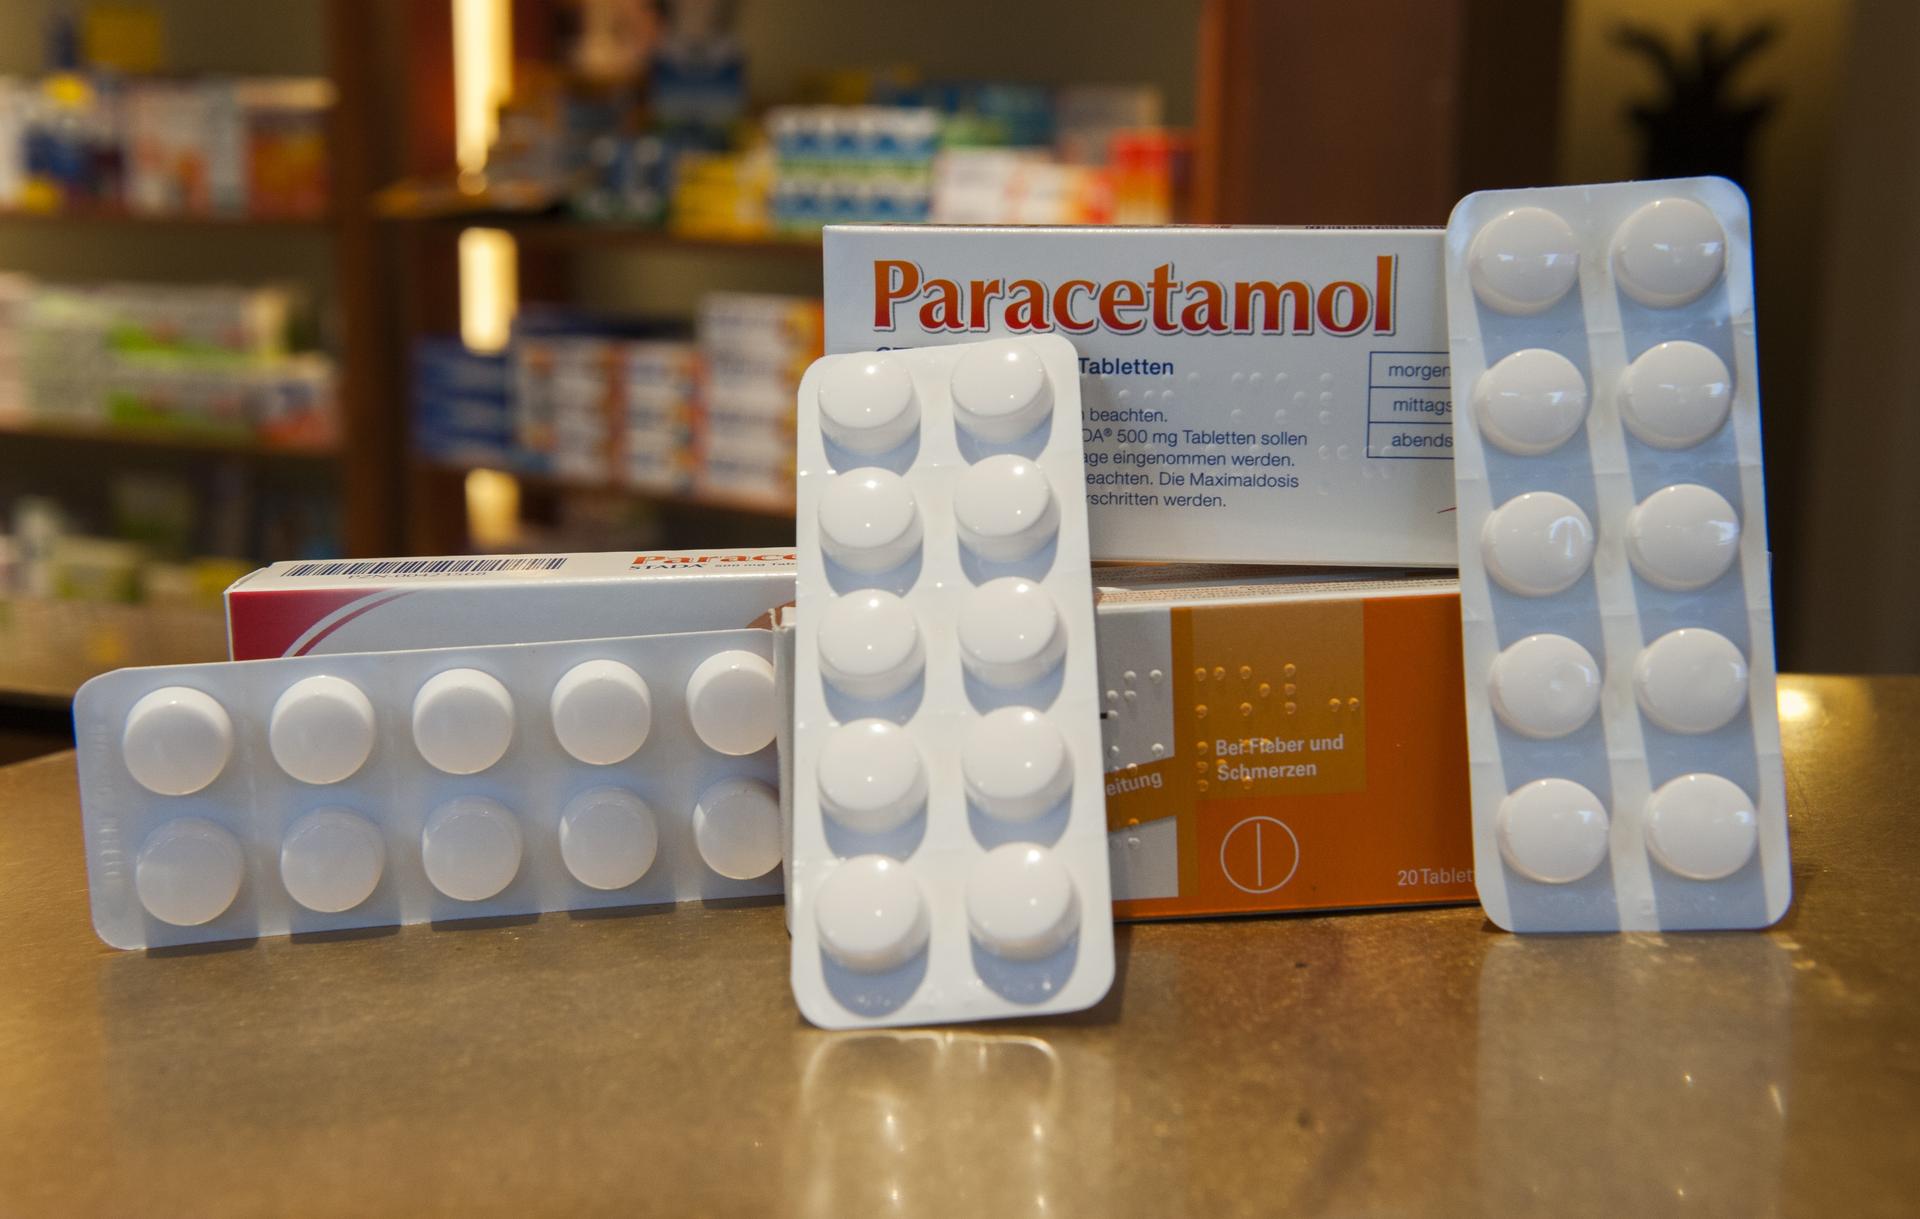 Take paracetamol with care.